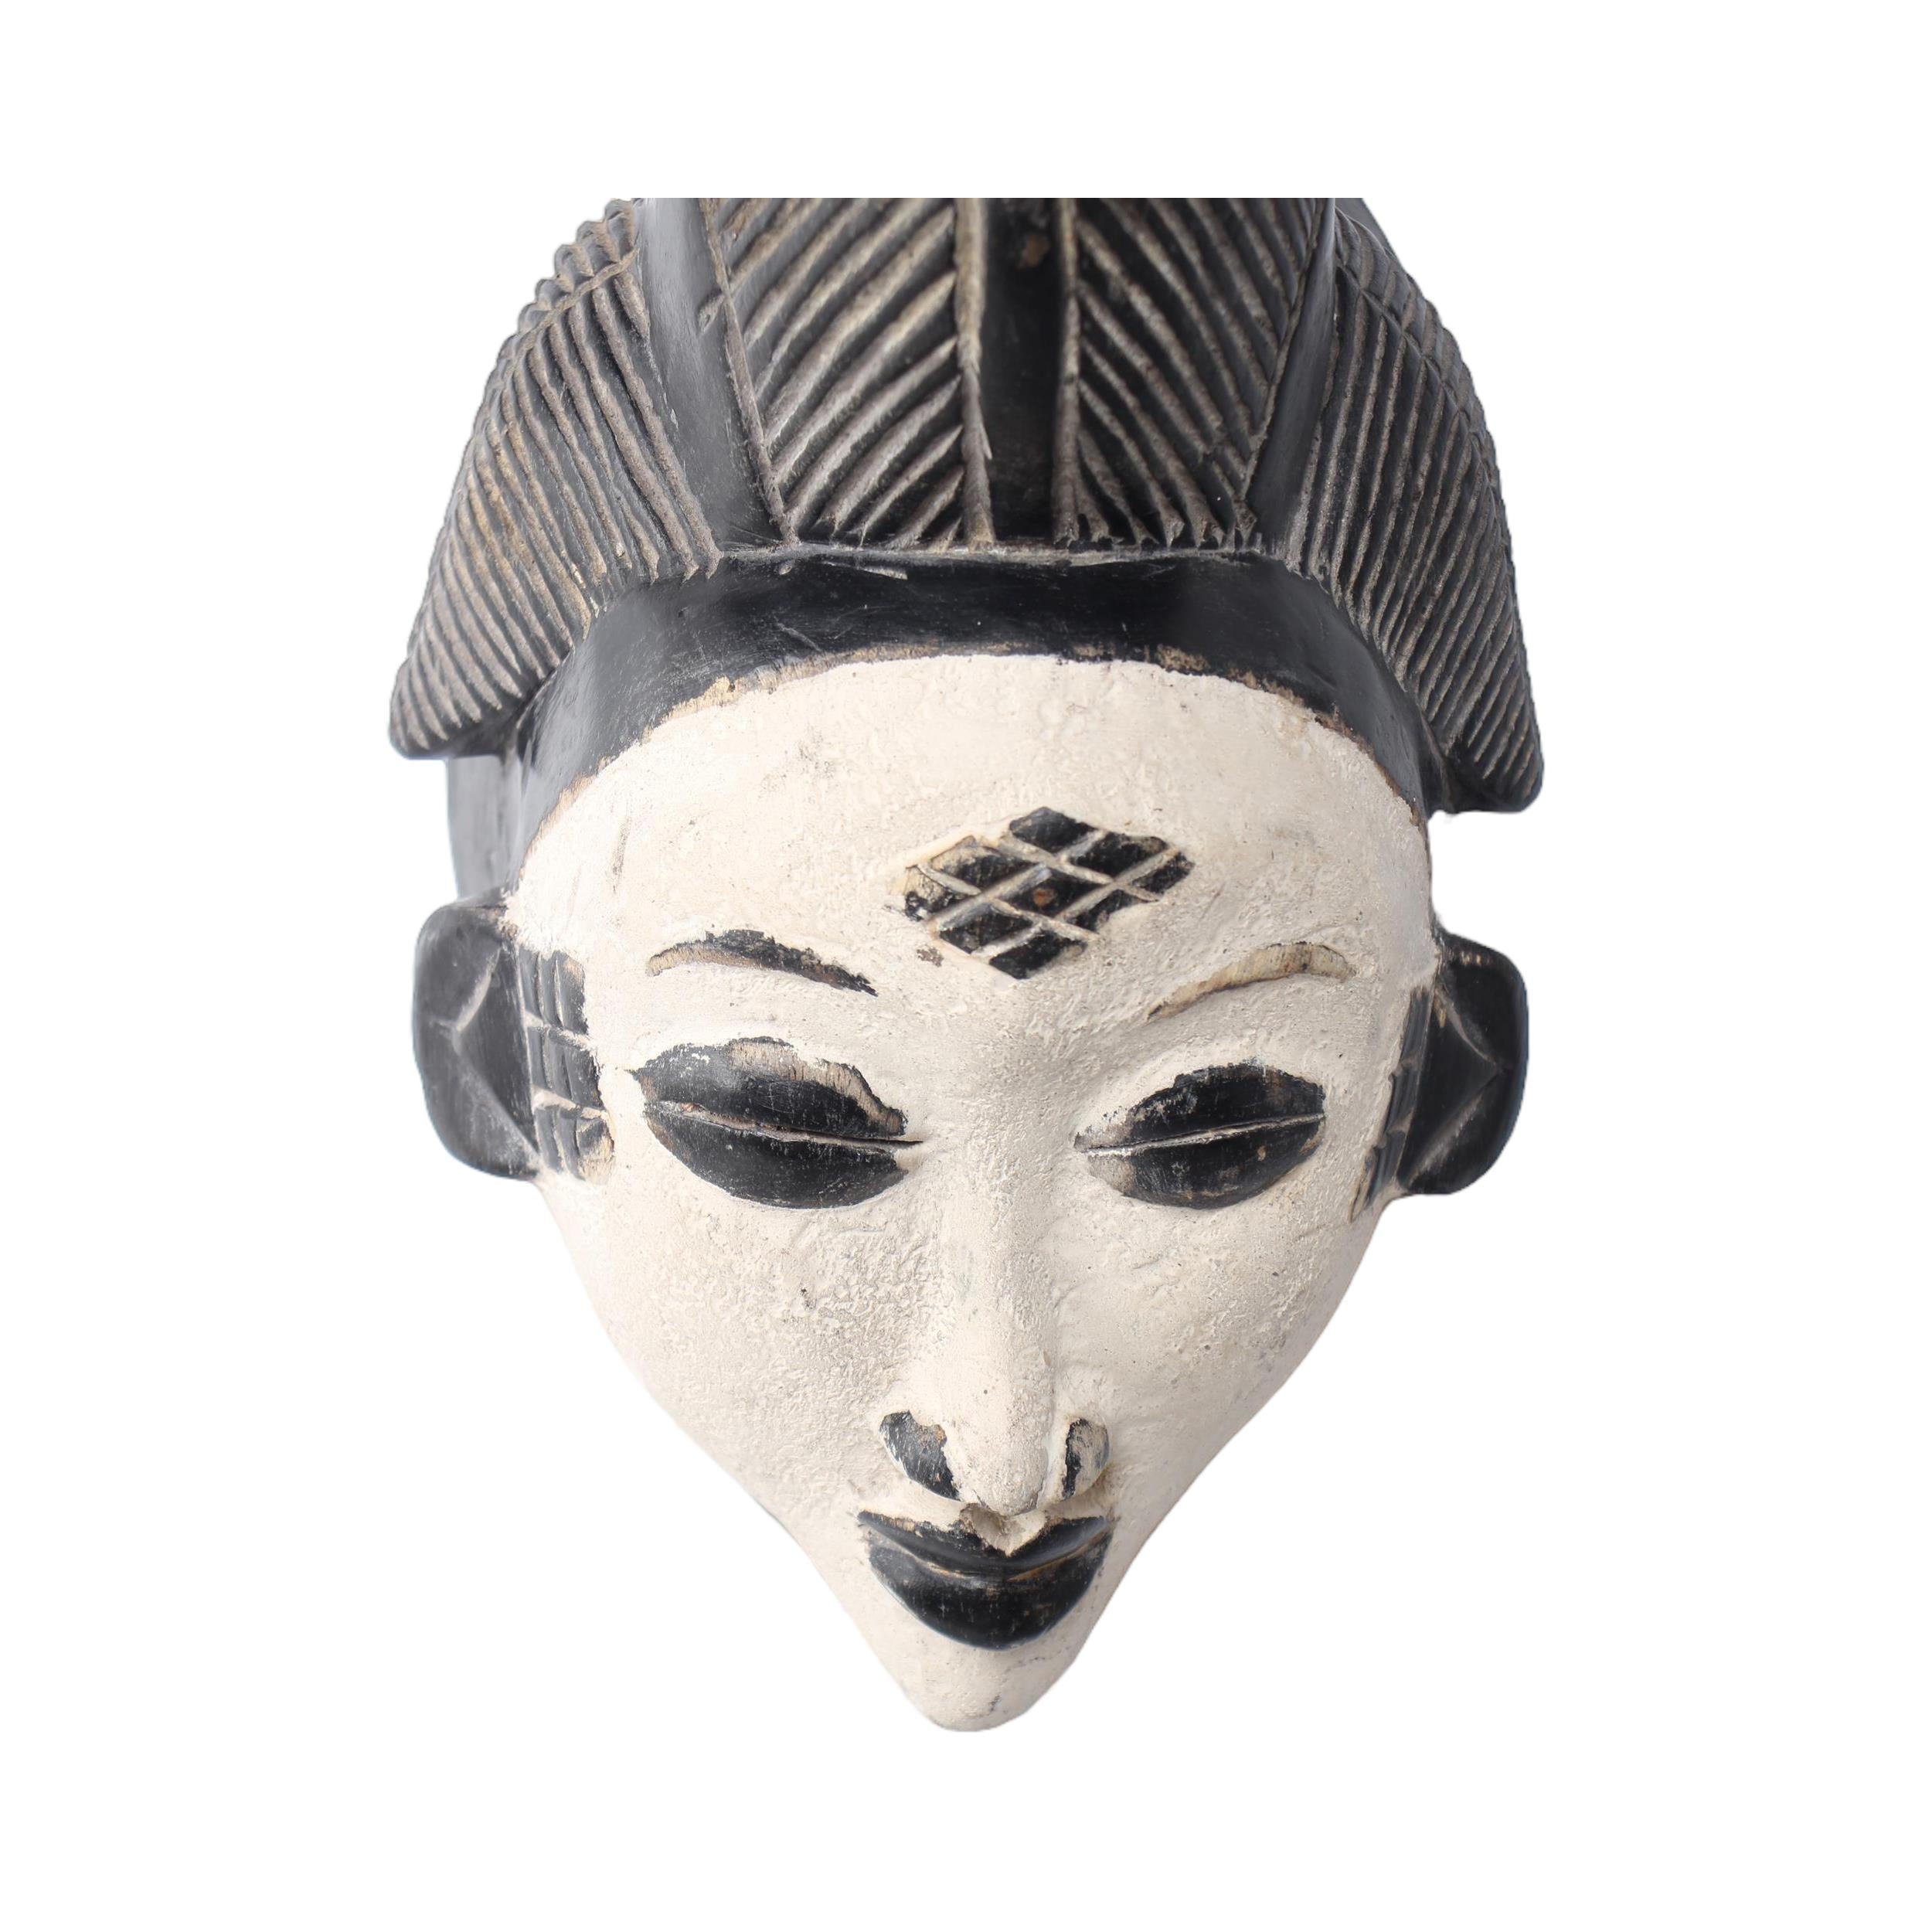 Punu Tribe Mask ~14.2" Tall